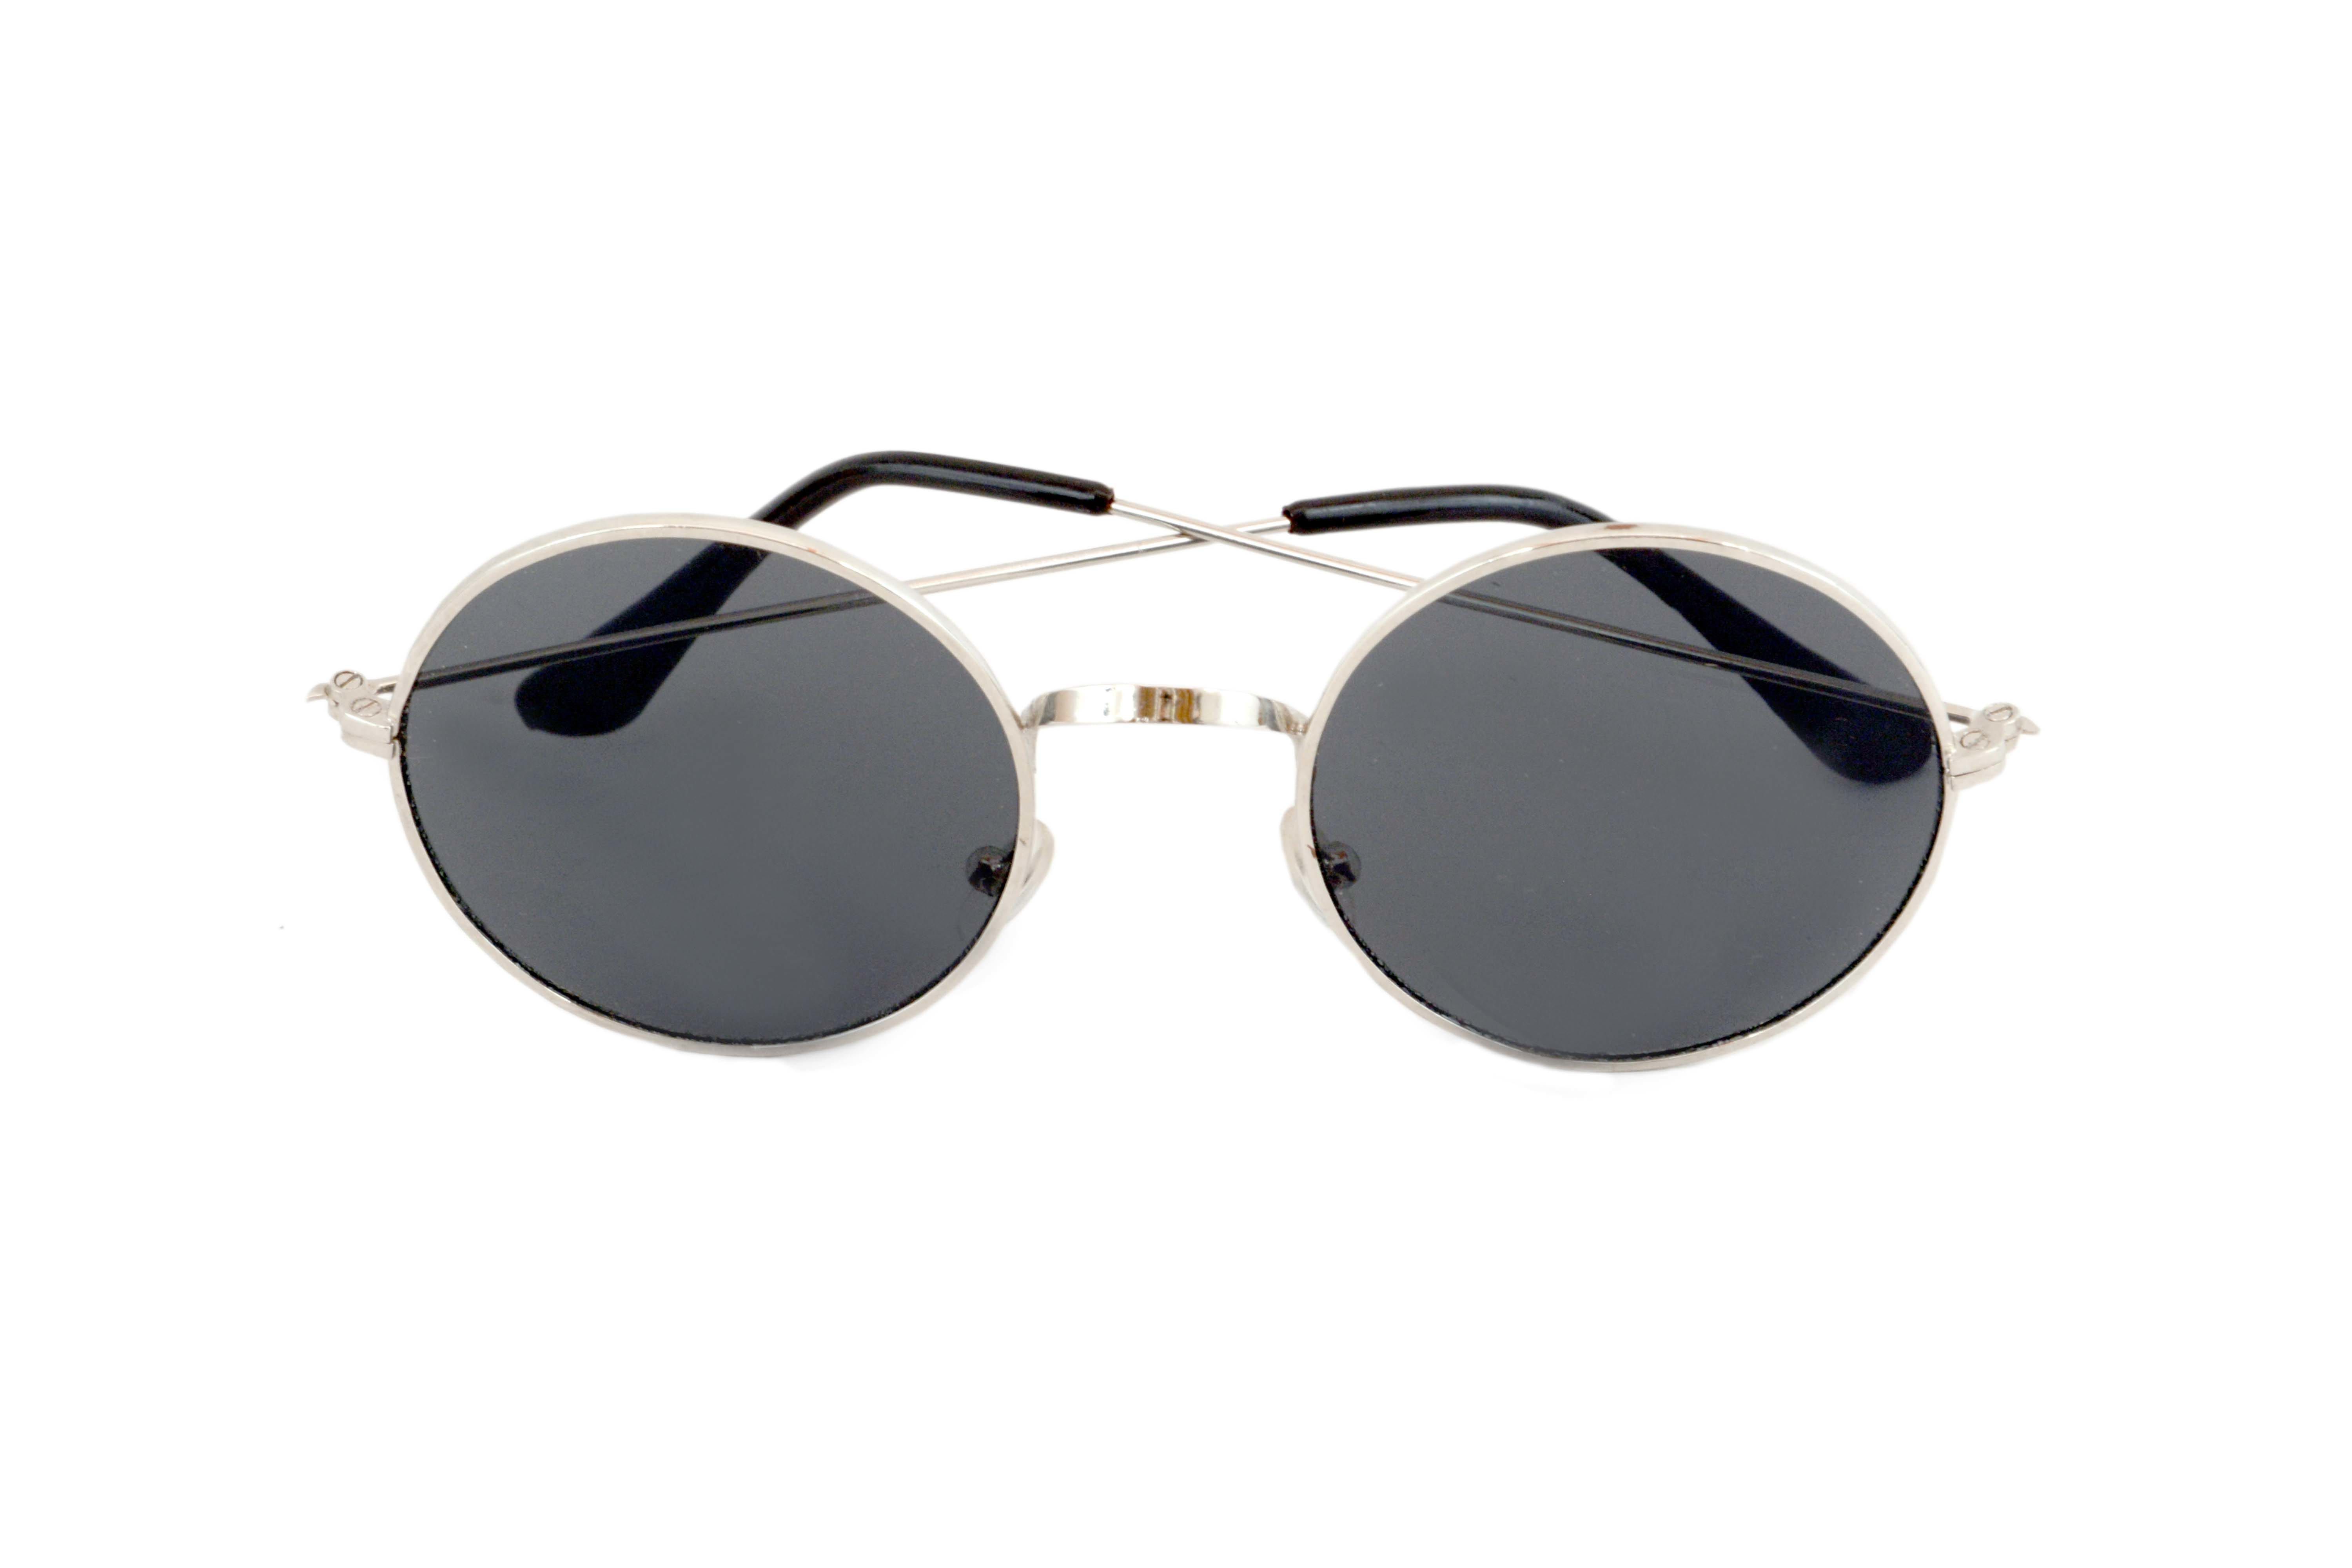 Hipe Black Round Sunglasses Wmn009 Buy Hipe Black Round Sunglasses Wmn009 Online At